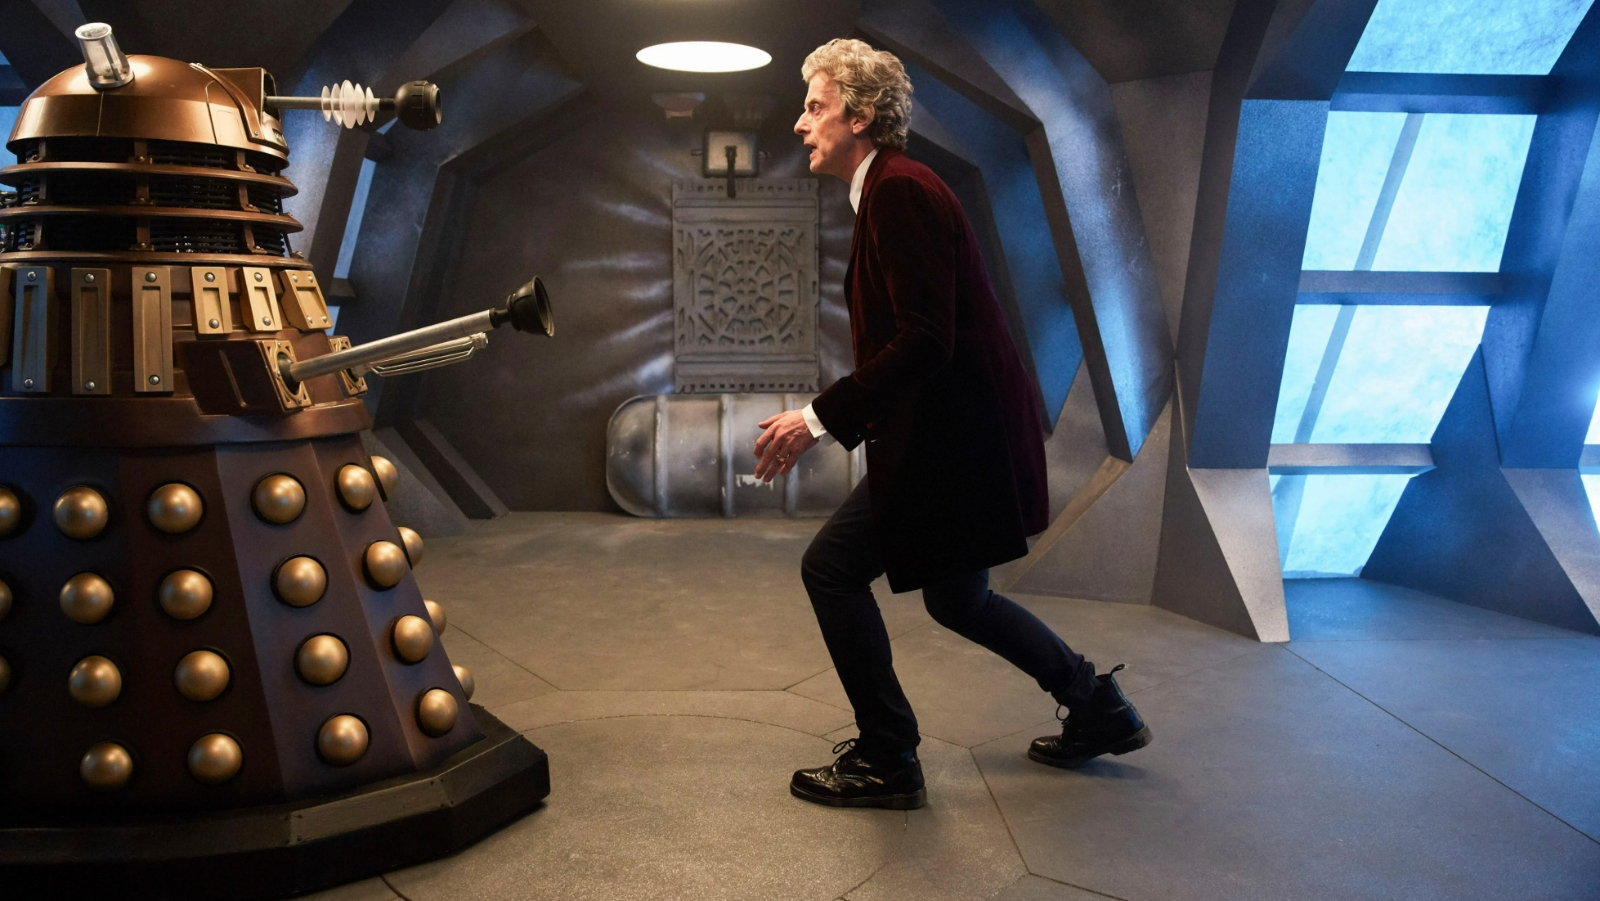 Capaldi as Doctor Who (BBC, Simon Ridgeway)